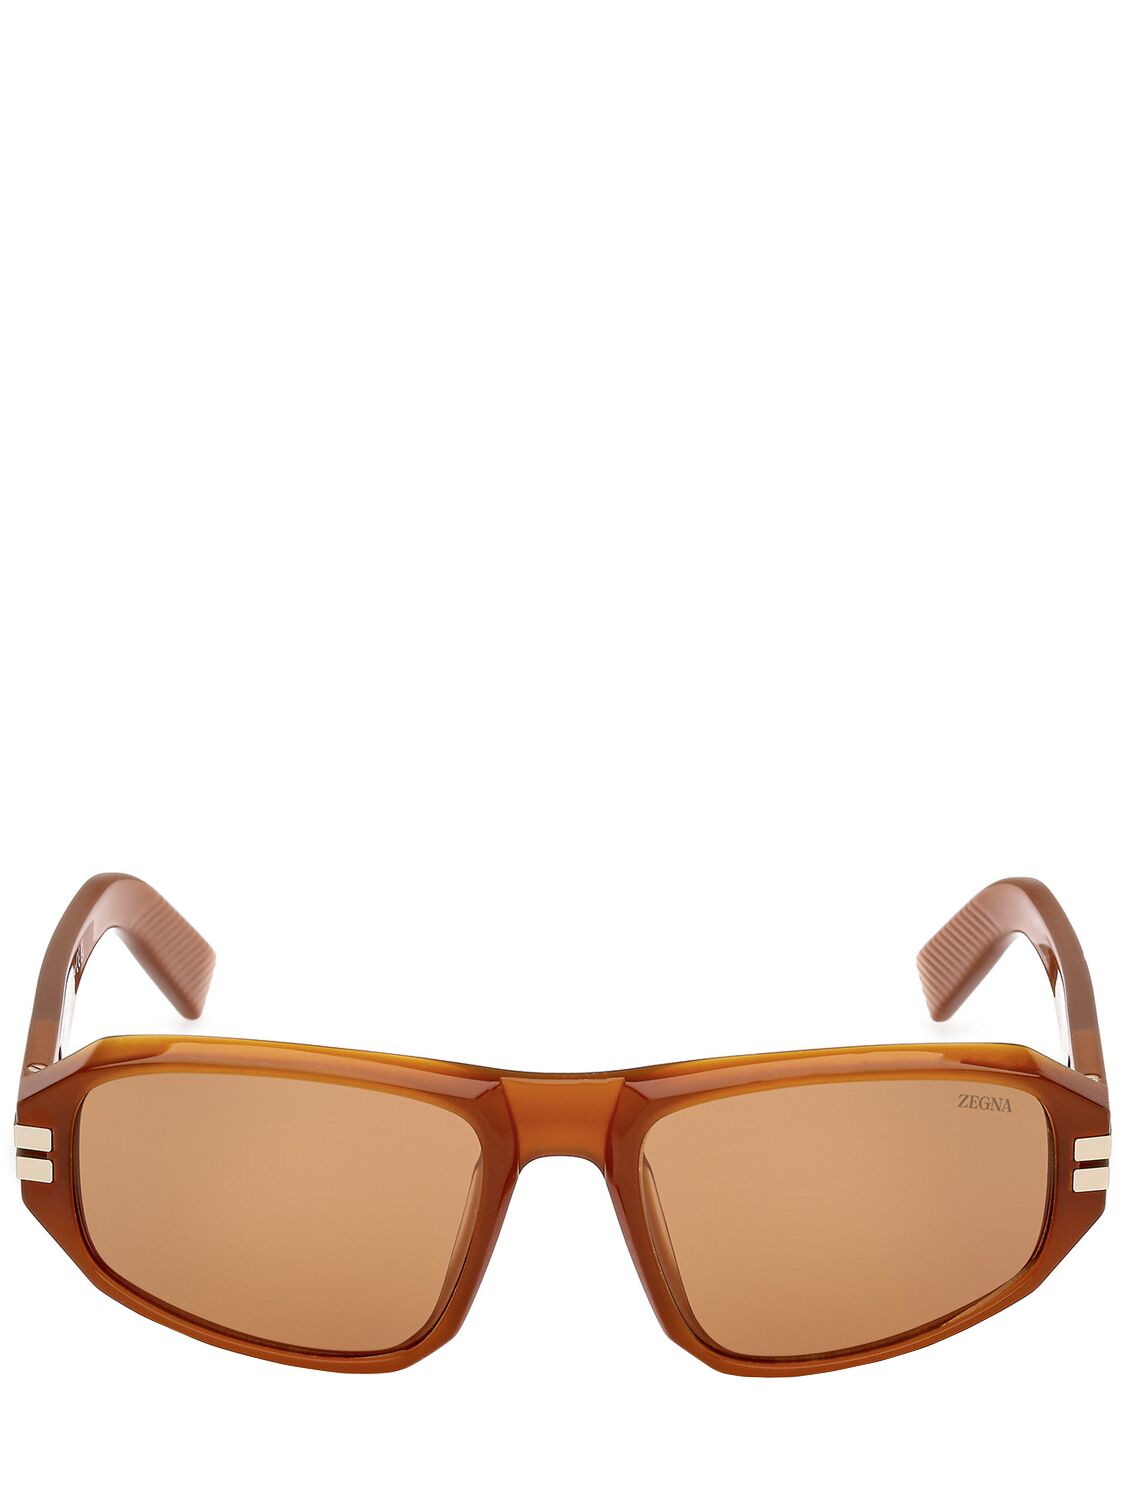 Zegna Squared Sunglasses In Brown